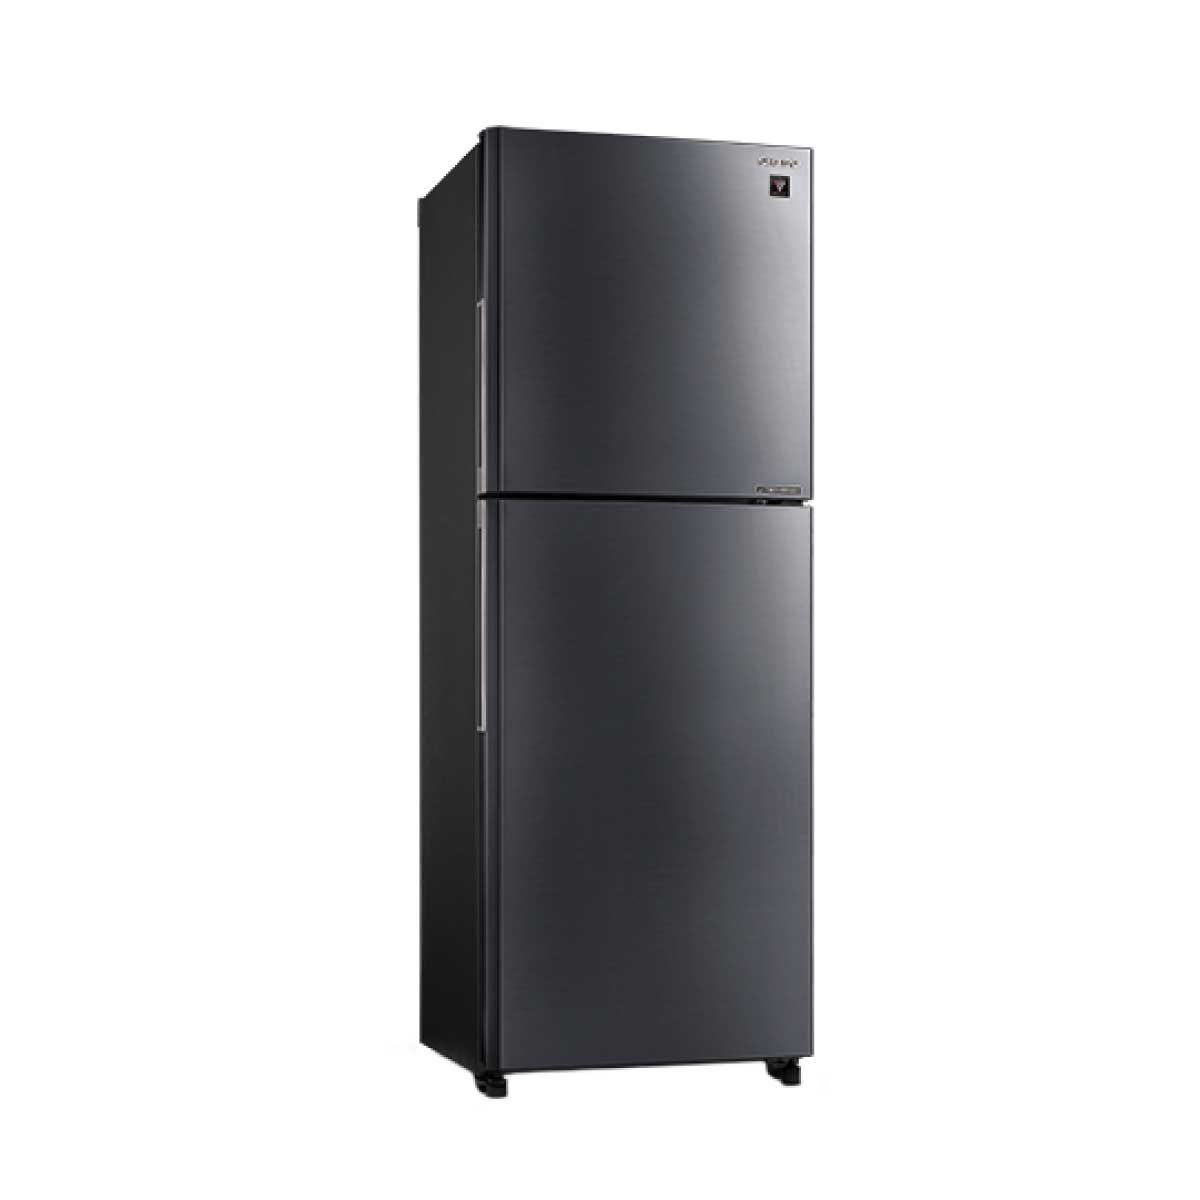 SHARP ตู้เย็น 2 ประตู PEACH SERIES 12.7 คิวInverter รุ่นSJ-XP360TP-DK